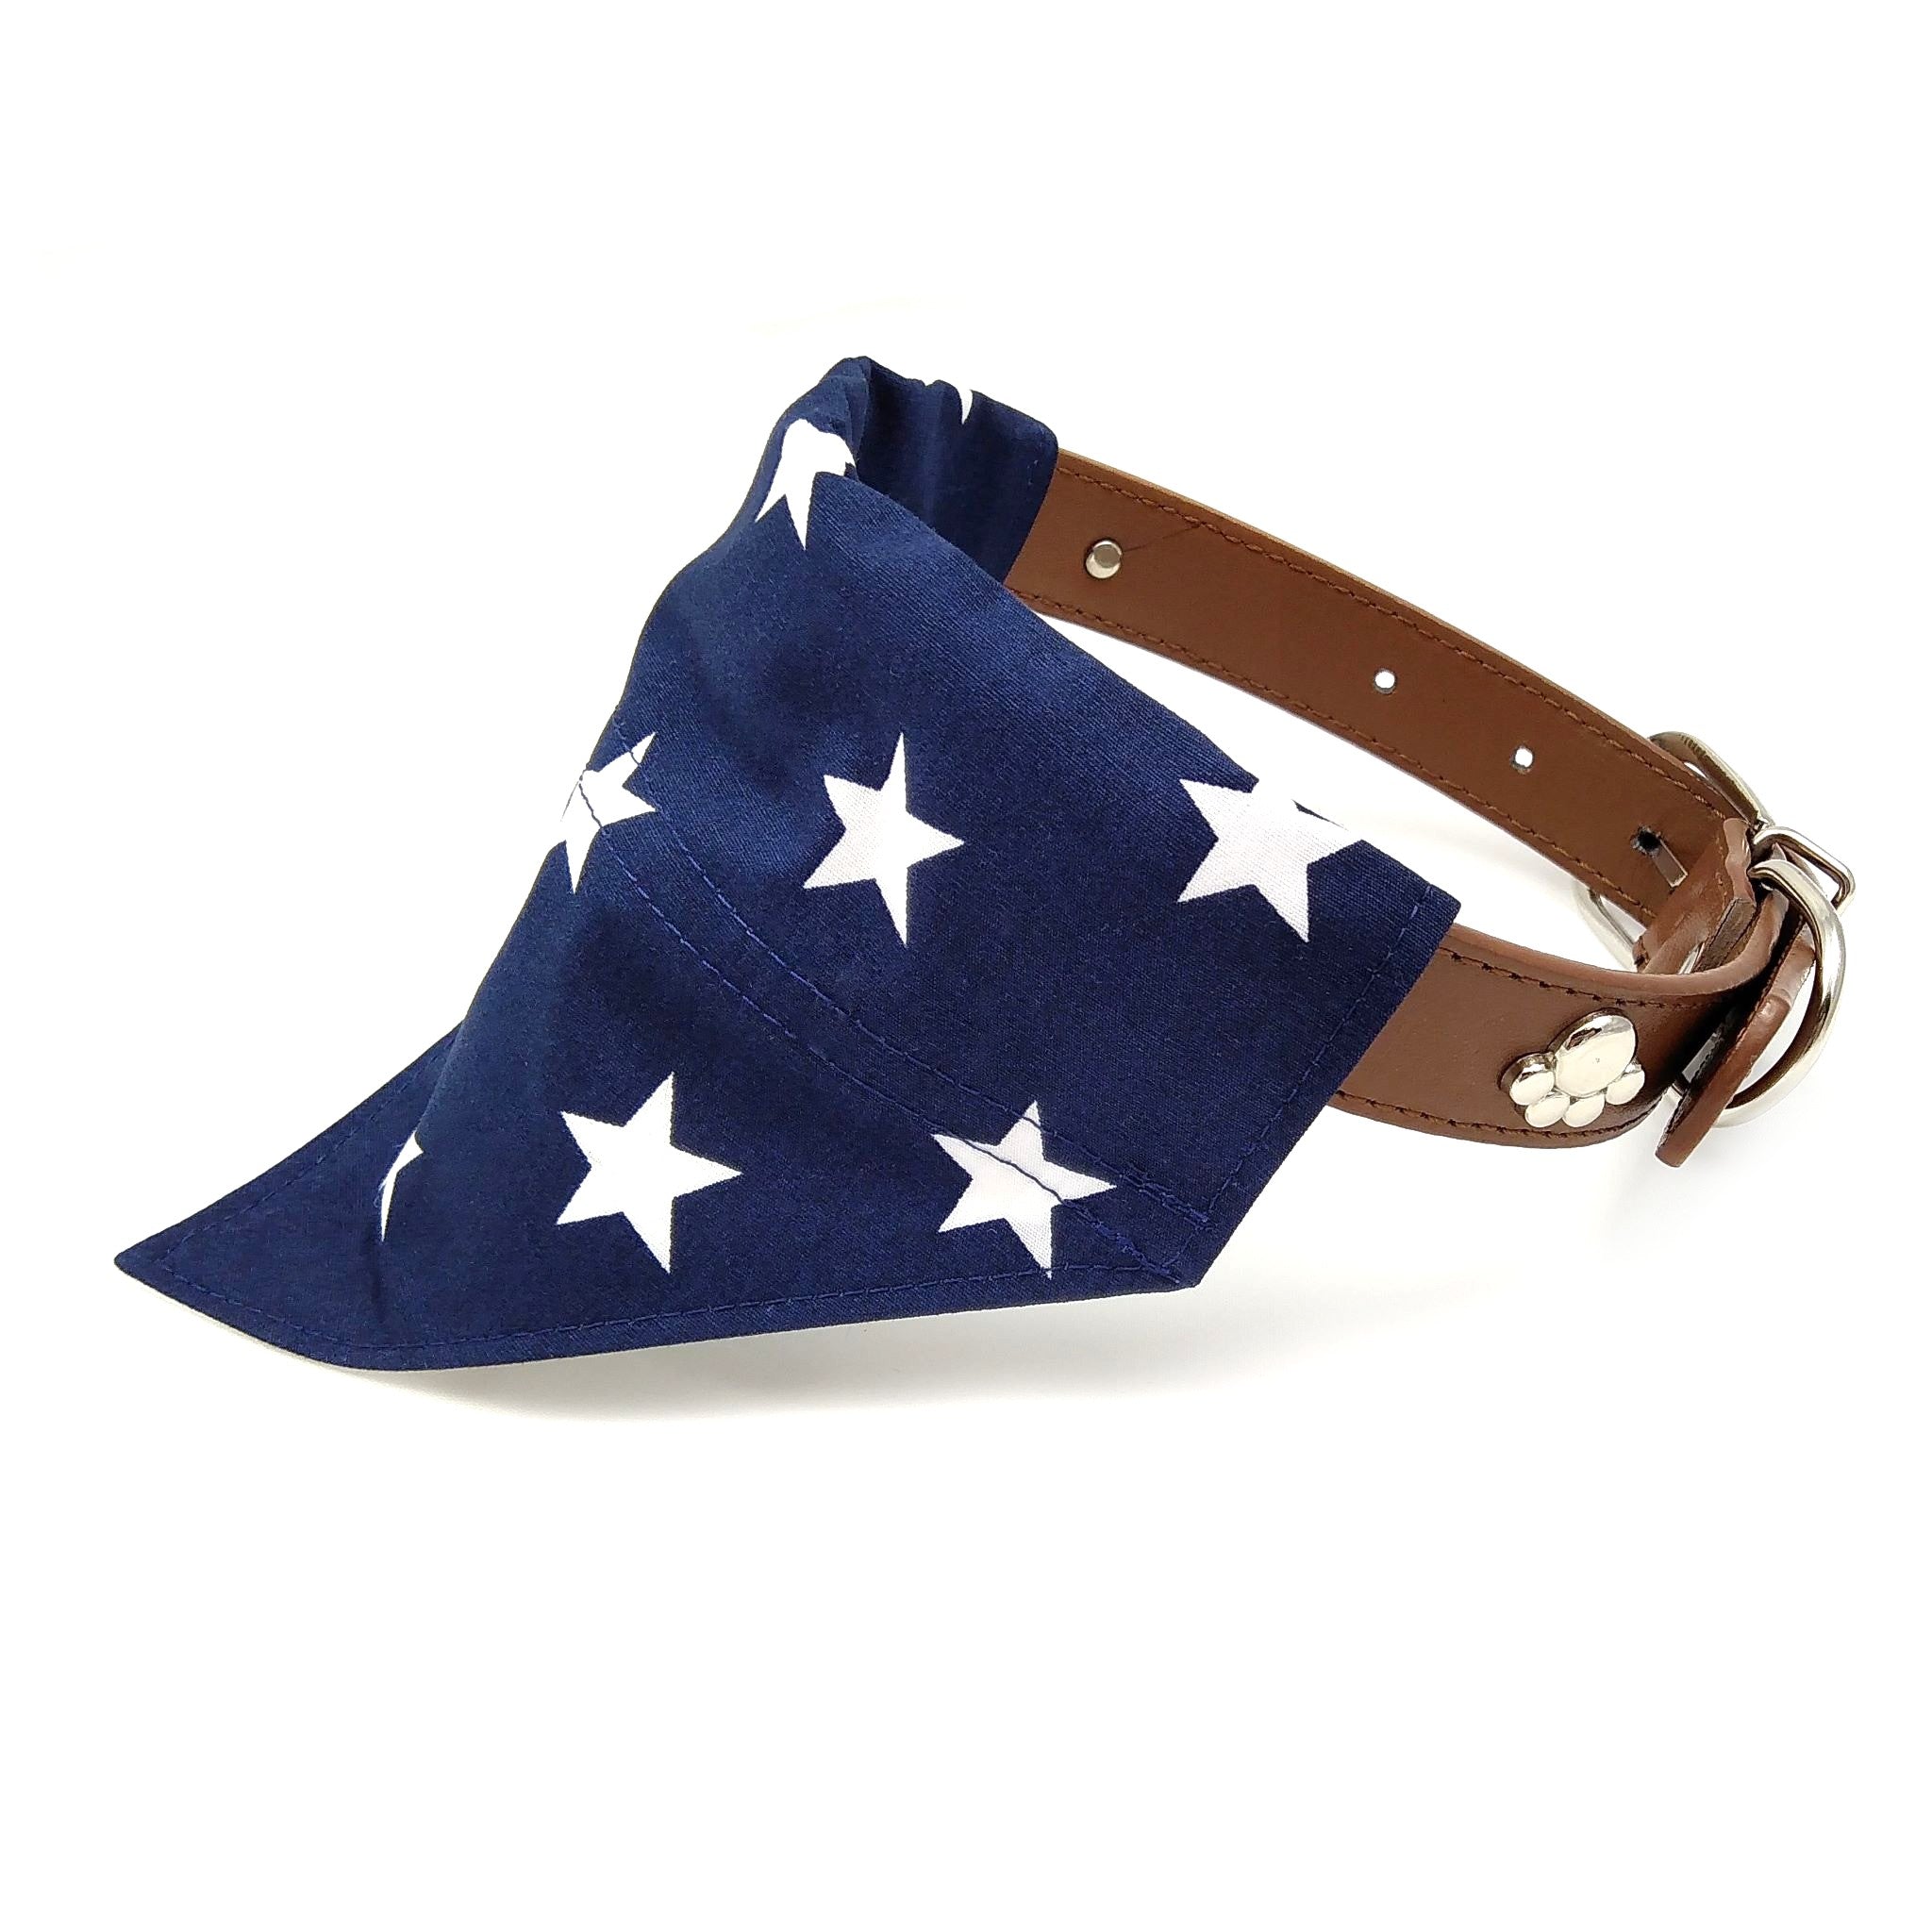 Navy stars bandana on dog collar from side